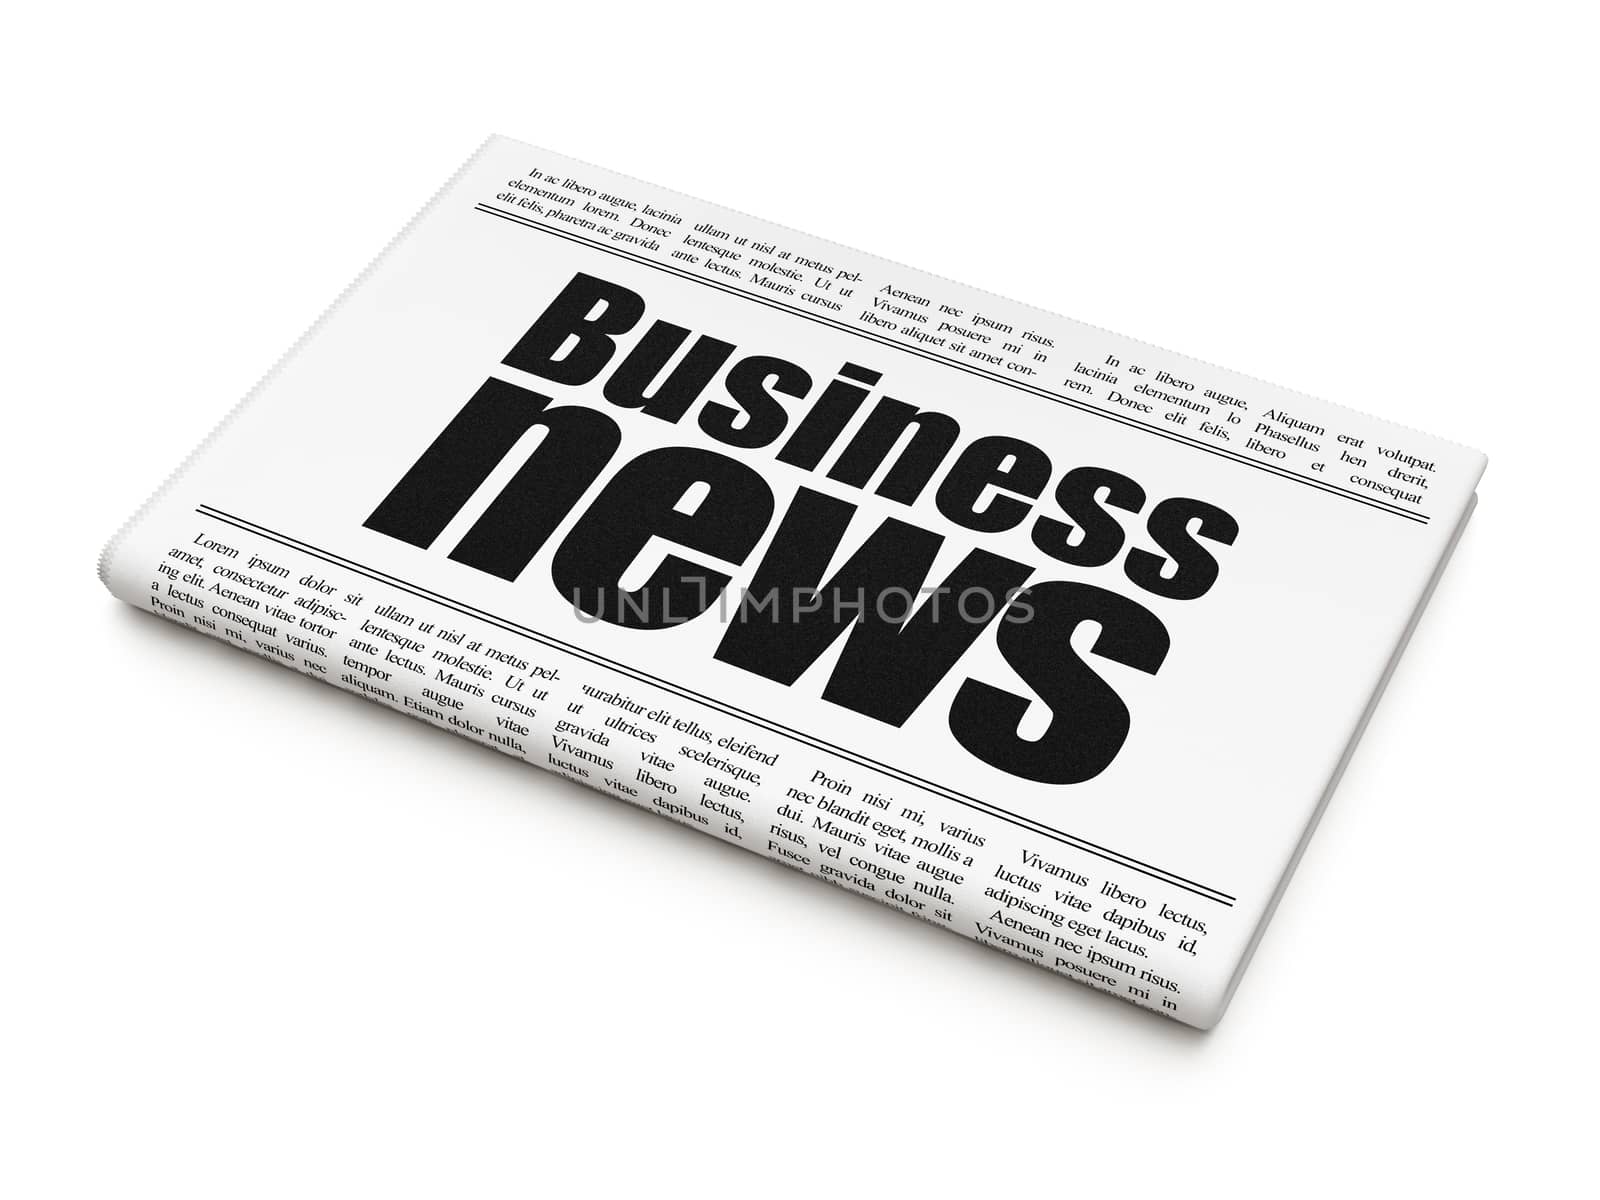 News news concept: newspaper headline Business News on White background, 3d render